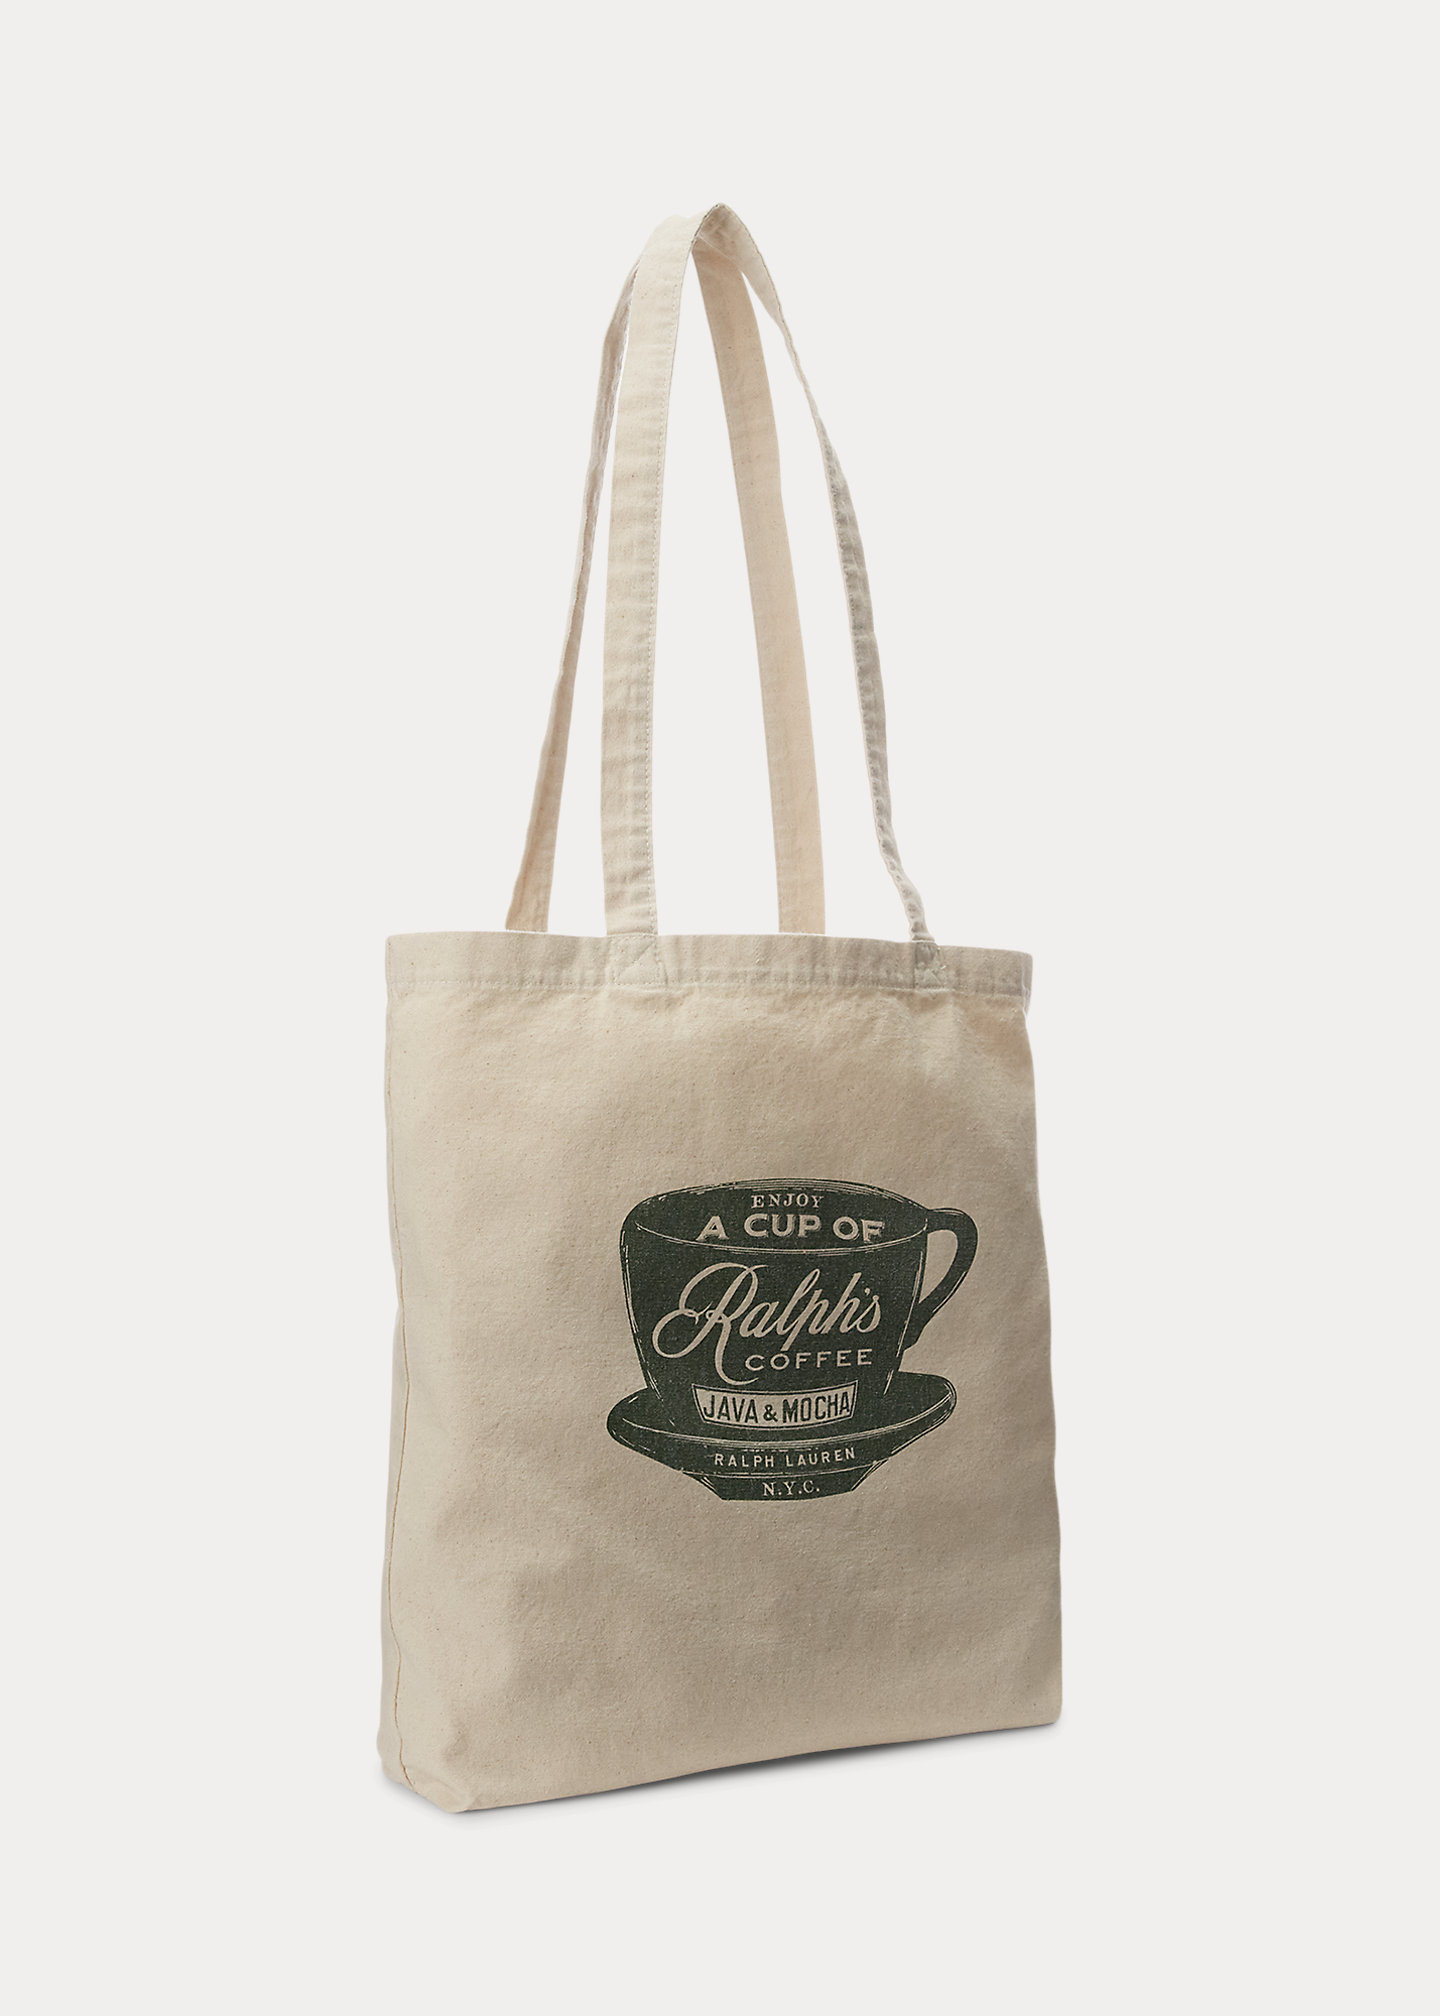 stylish handbagsRalph’s Coffee Tote Bag-,$1.39-0